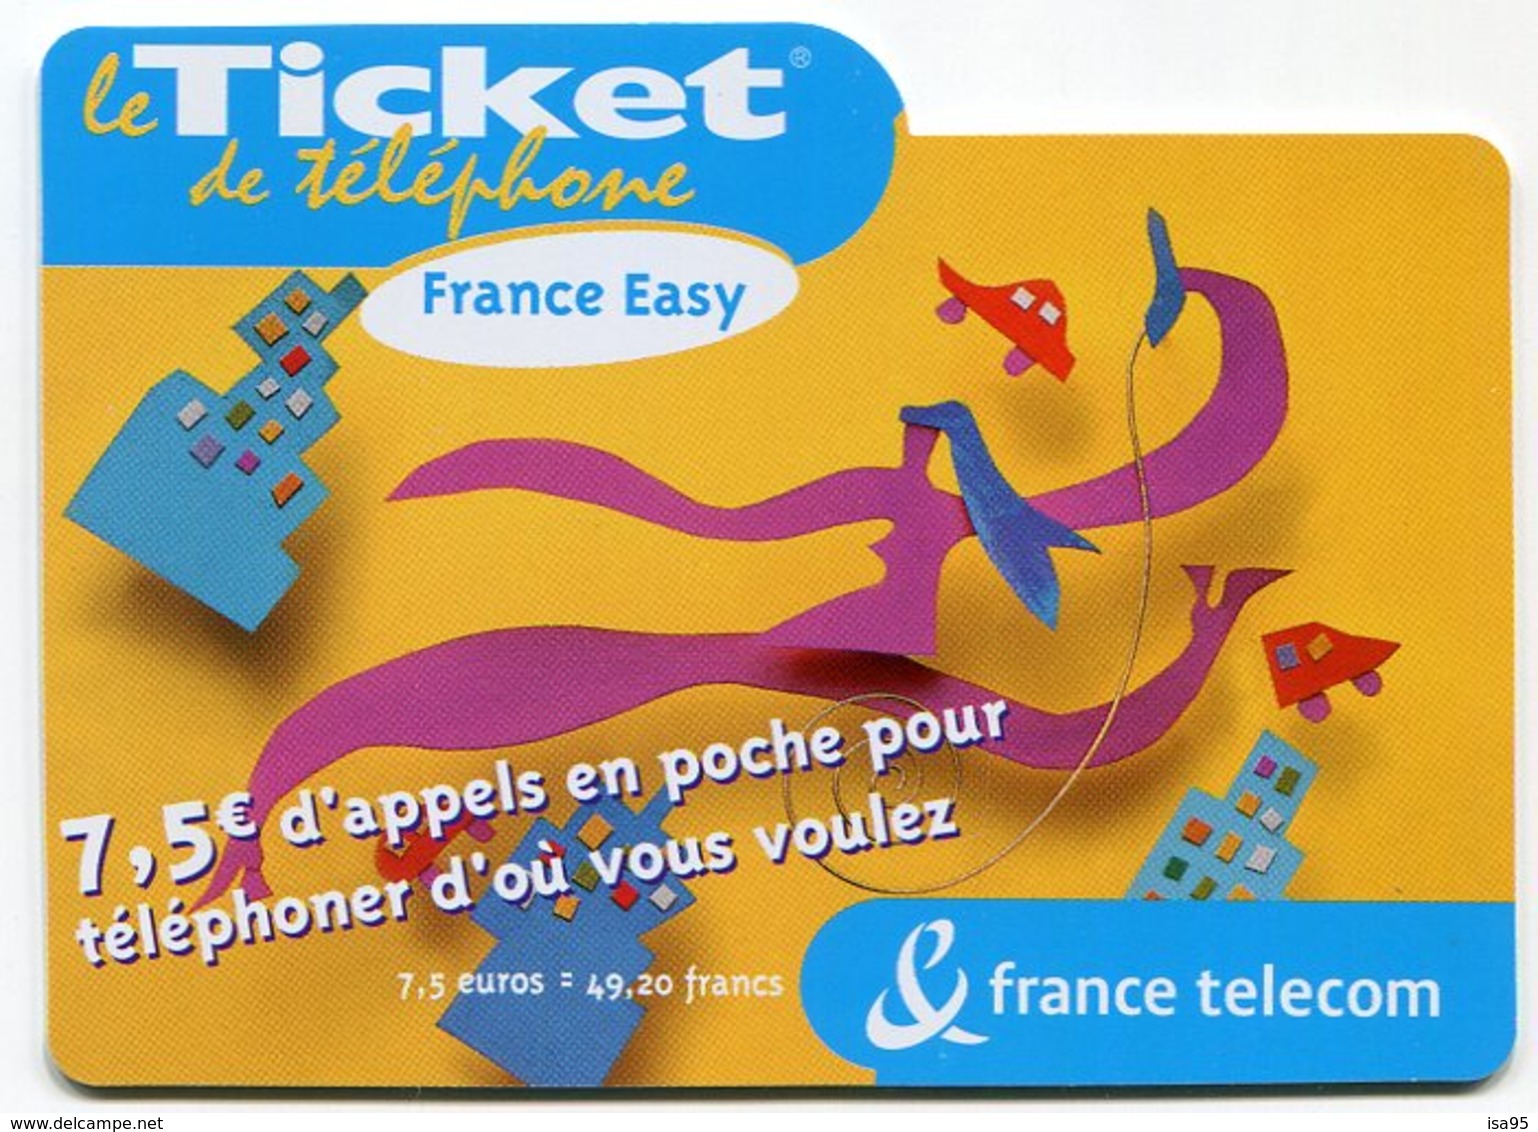 TELECARTE-LE TICKET DE TELEPHONE FRANCE EASY-2004-7.5€ - Billetes FT